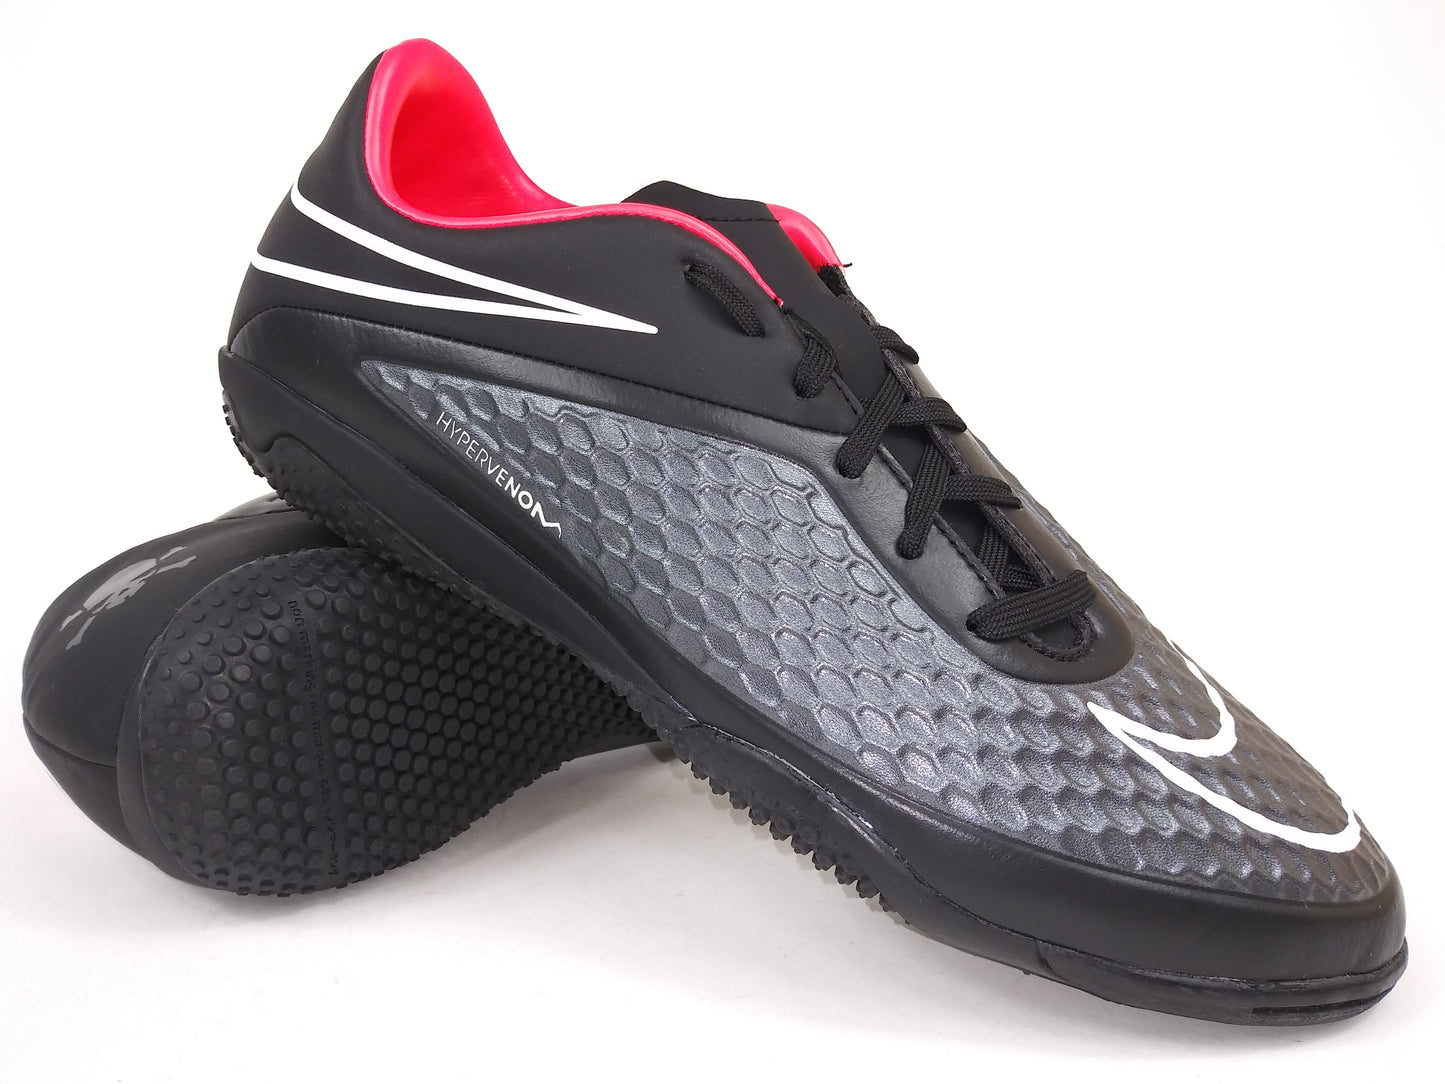 Nike Hypervenom Phelon IC Indoor Shoes Black Pink